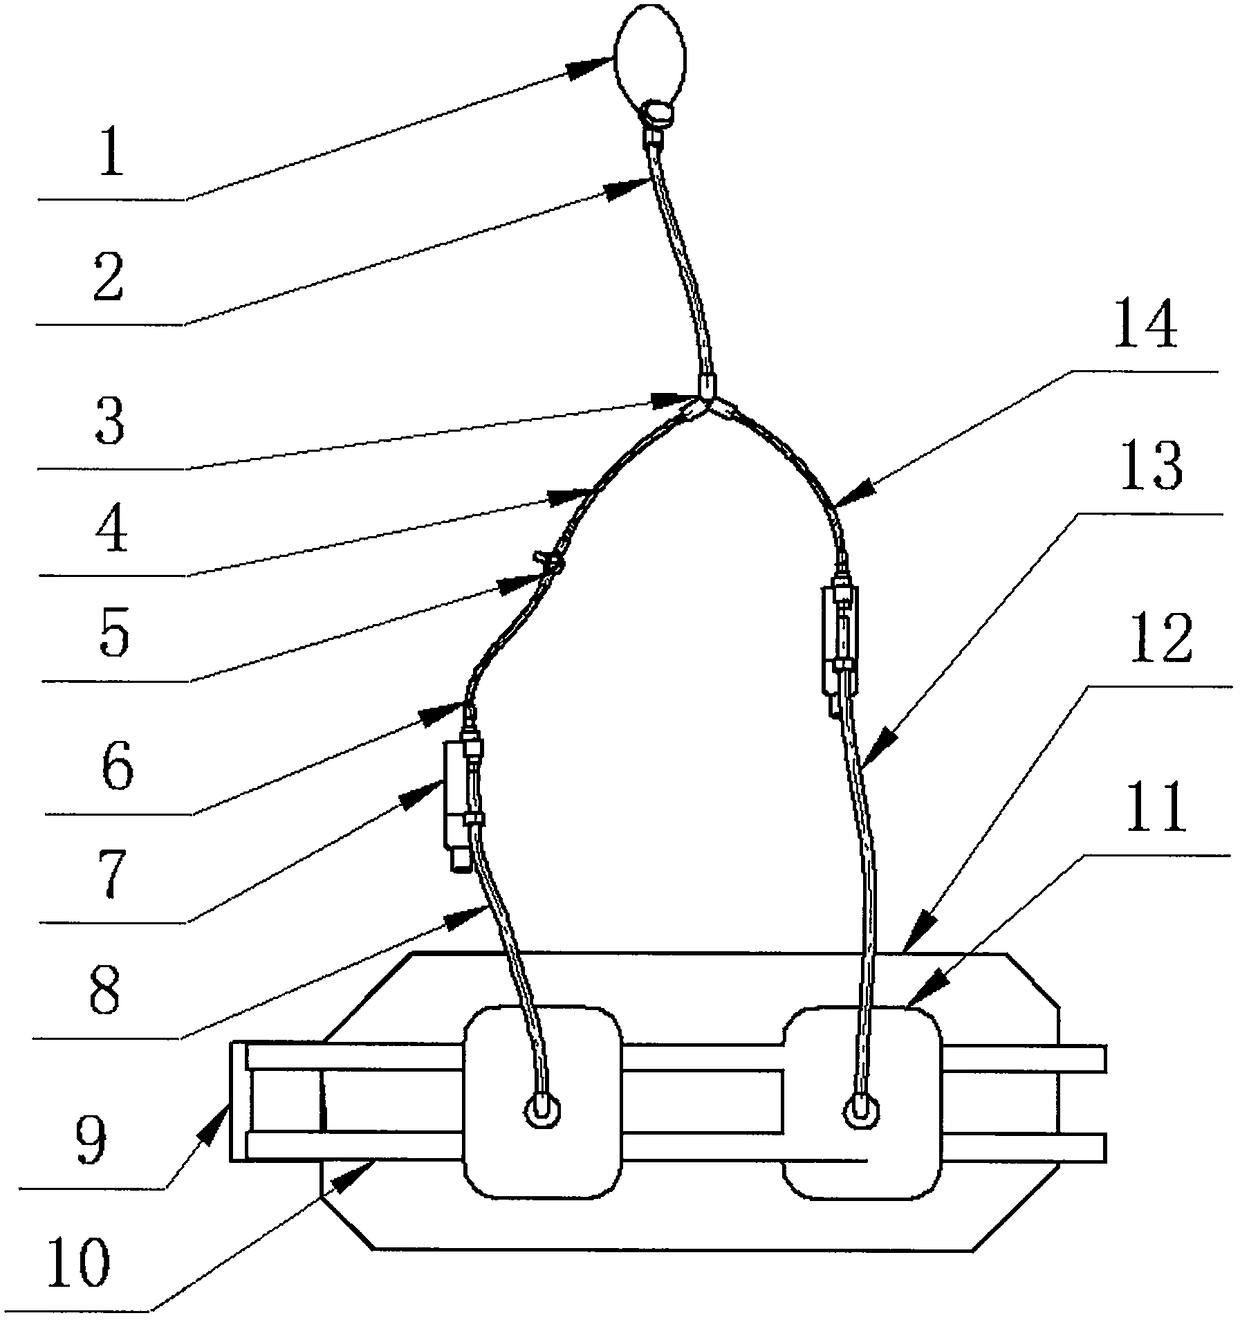 Clamp-belt dual-airbag compression hemostasis device